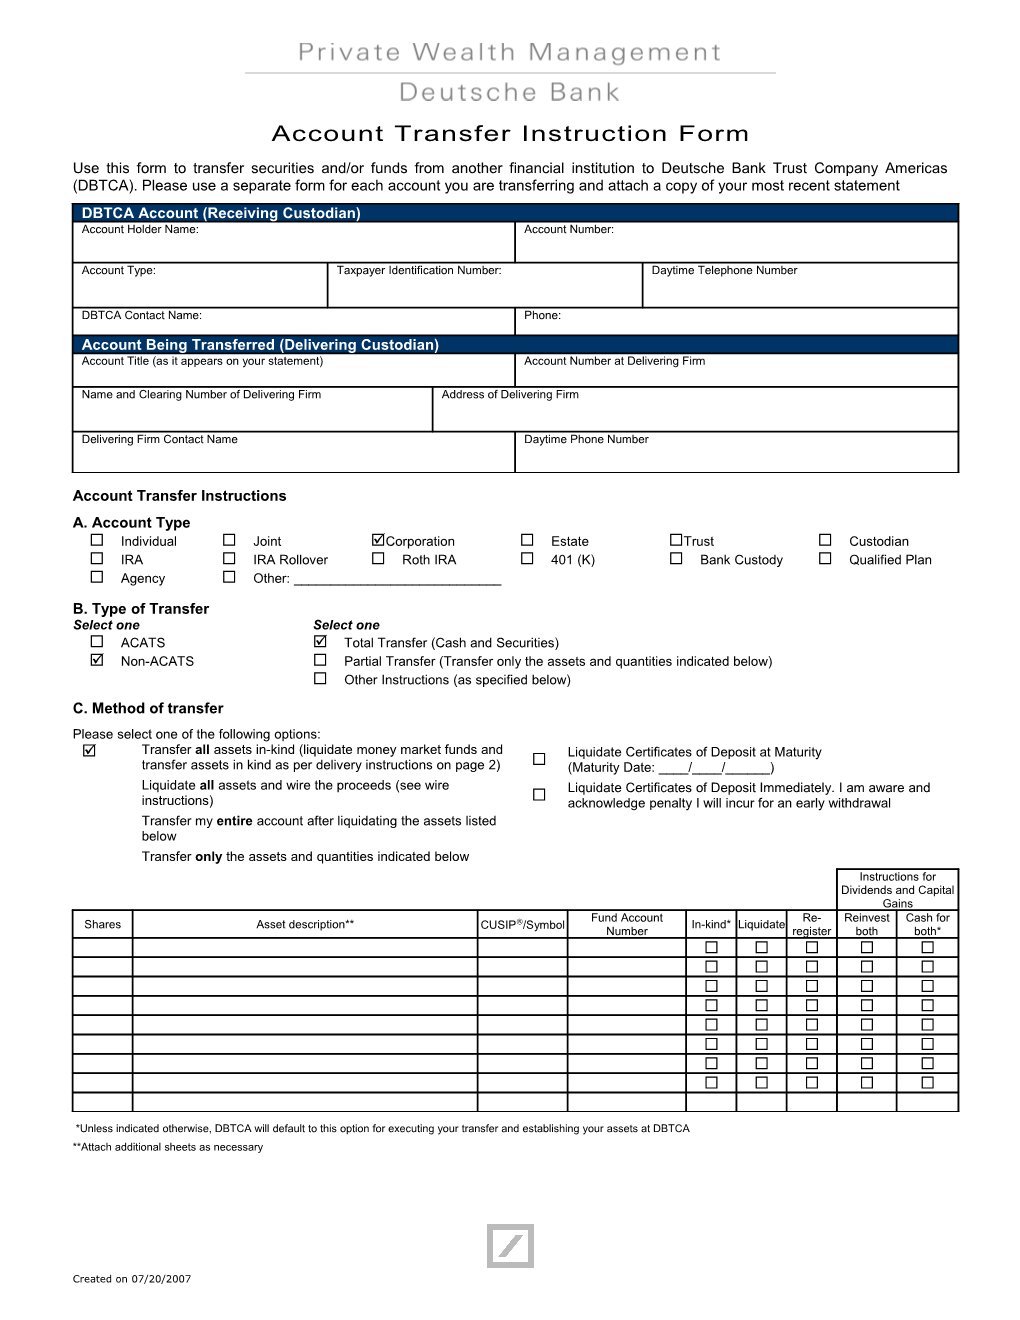 KYC Information Form LLC